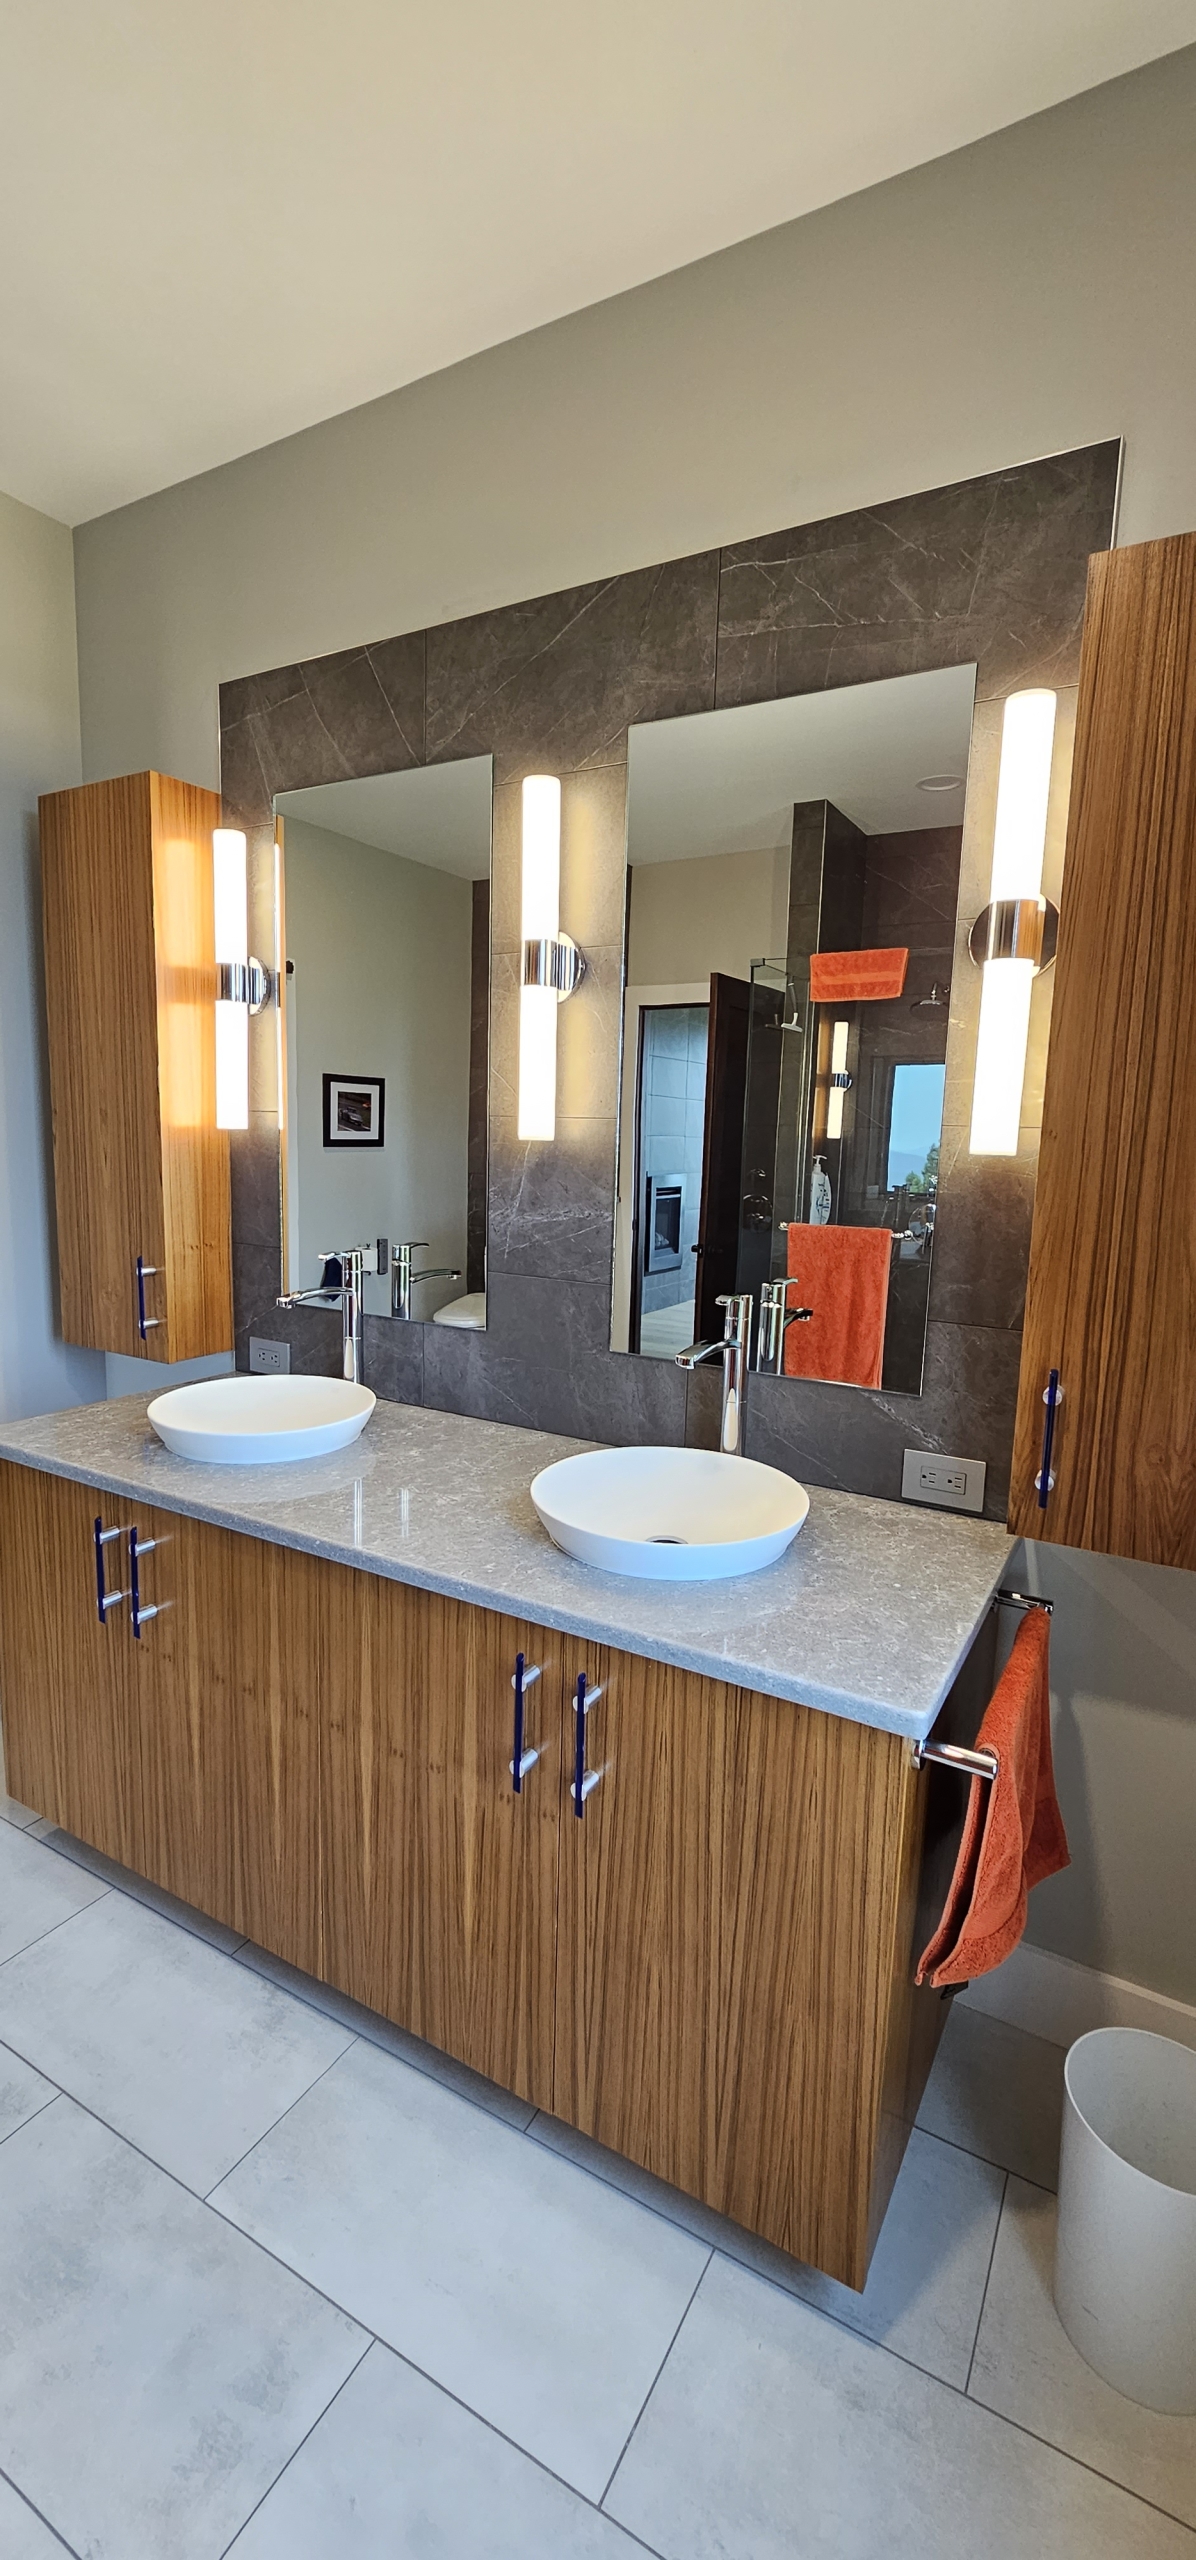 double bathroom vanity with vessel sinks